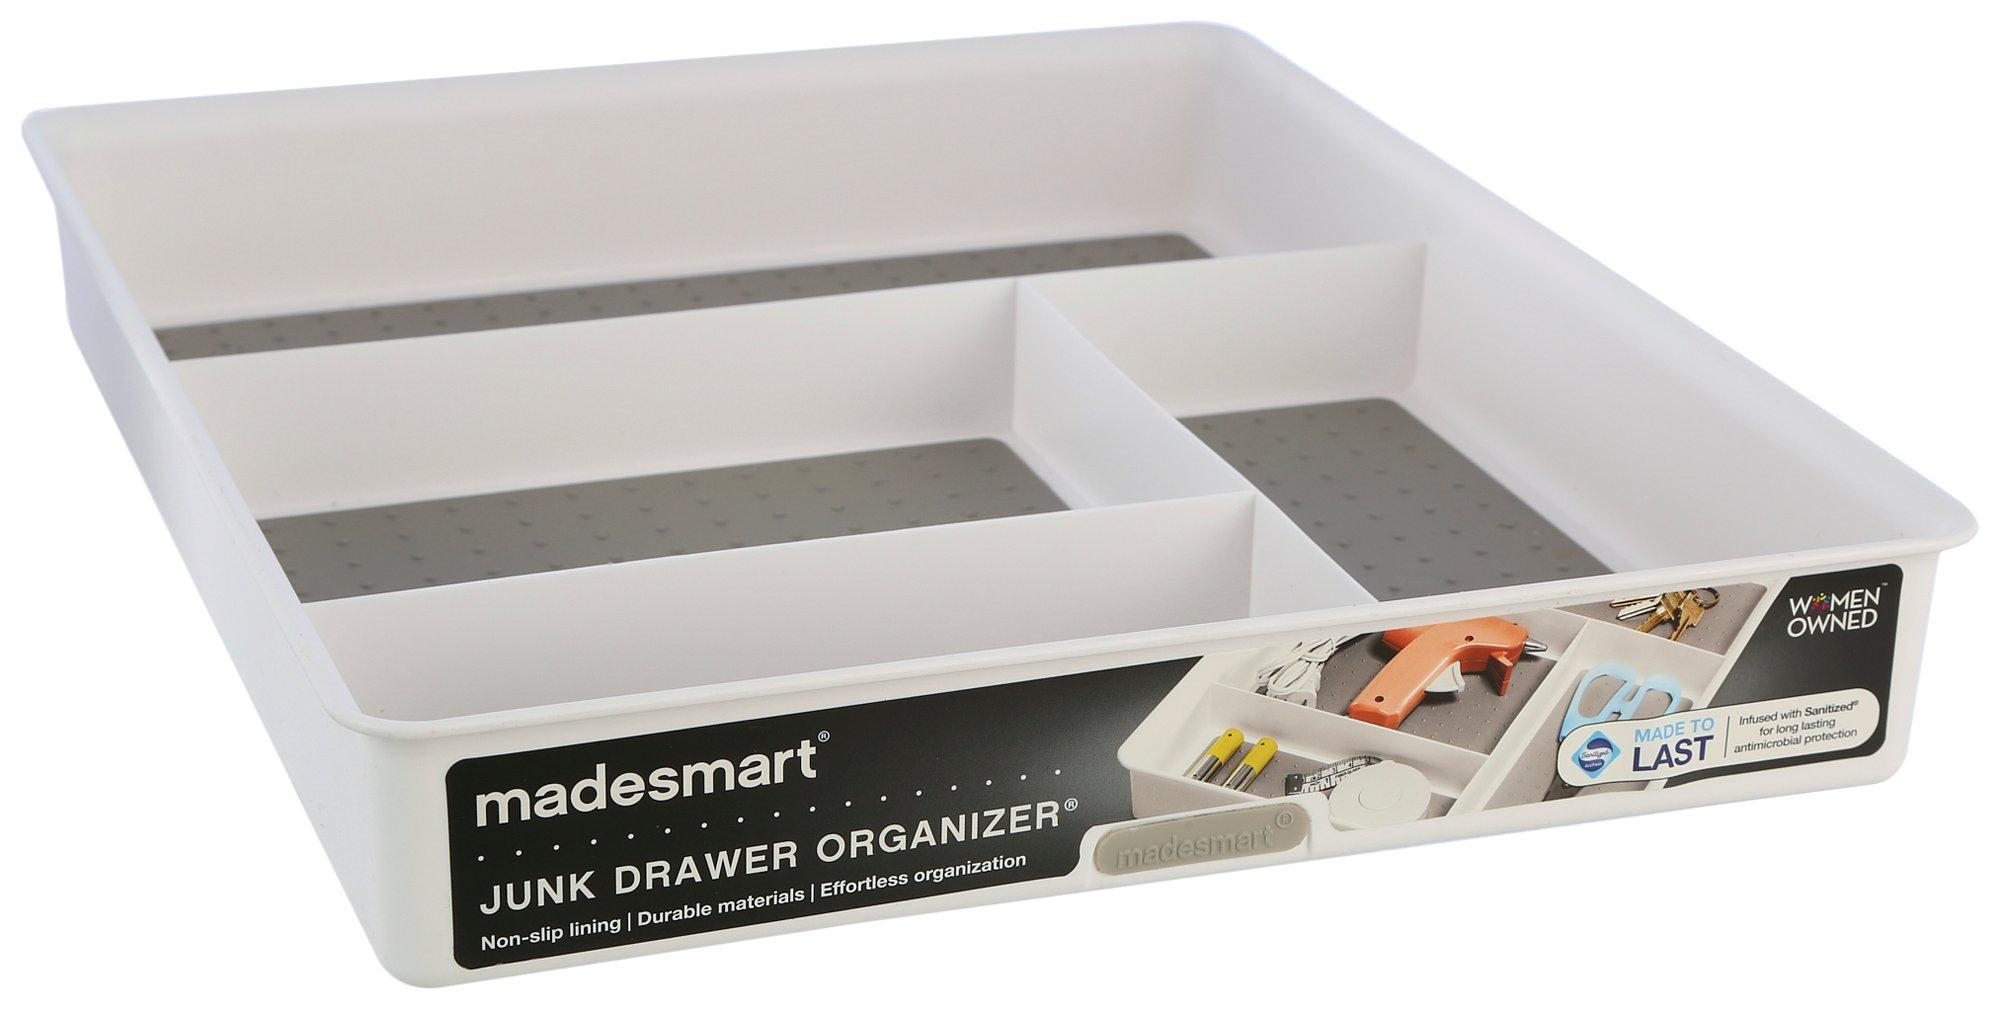 Madesmart 14.5x12 Junk Drawer Organizer